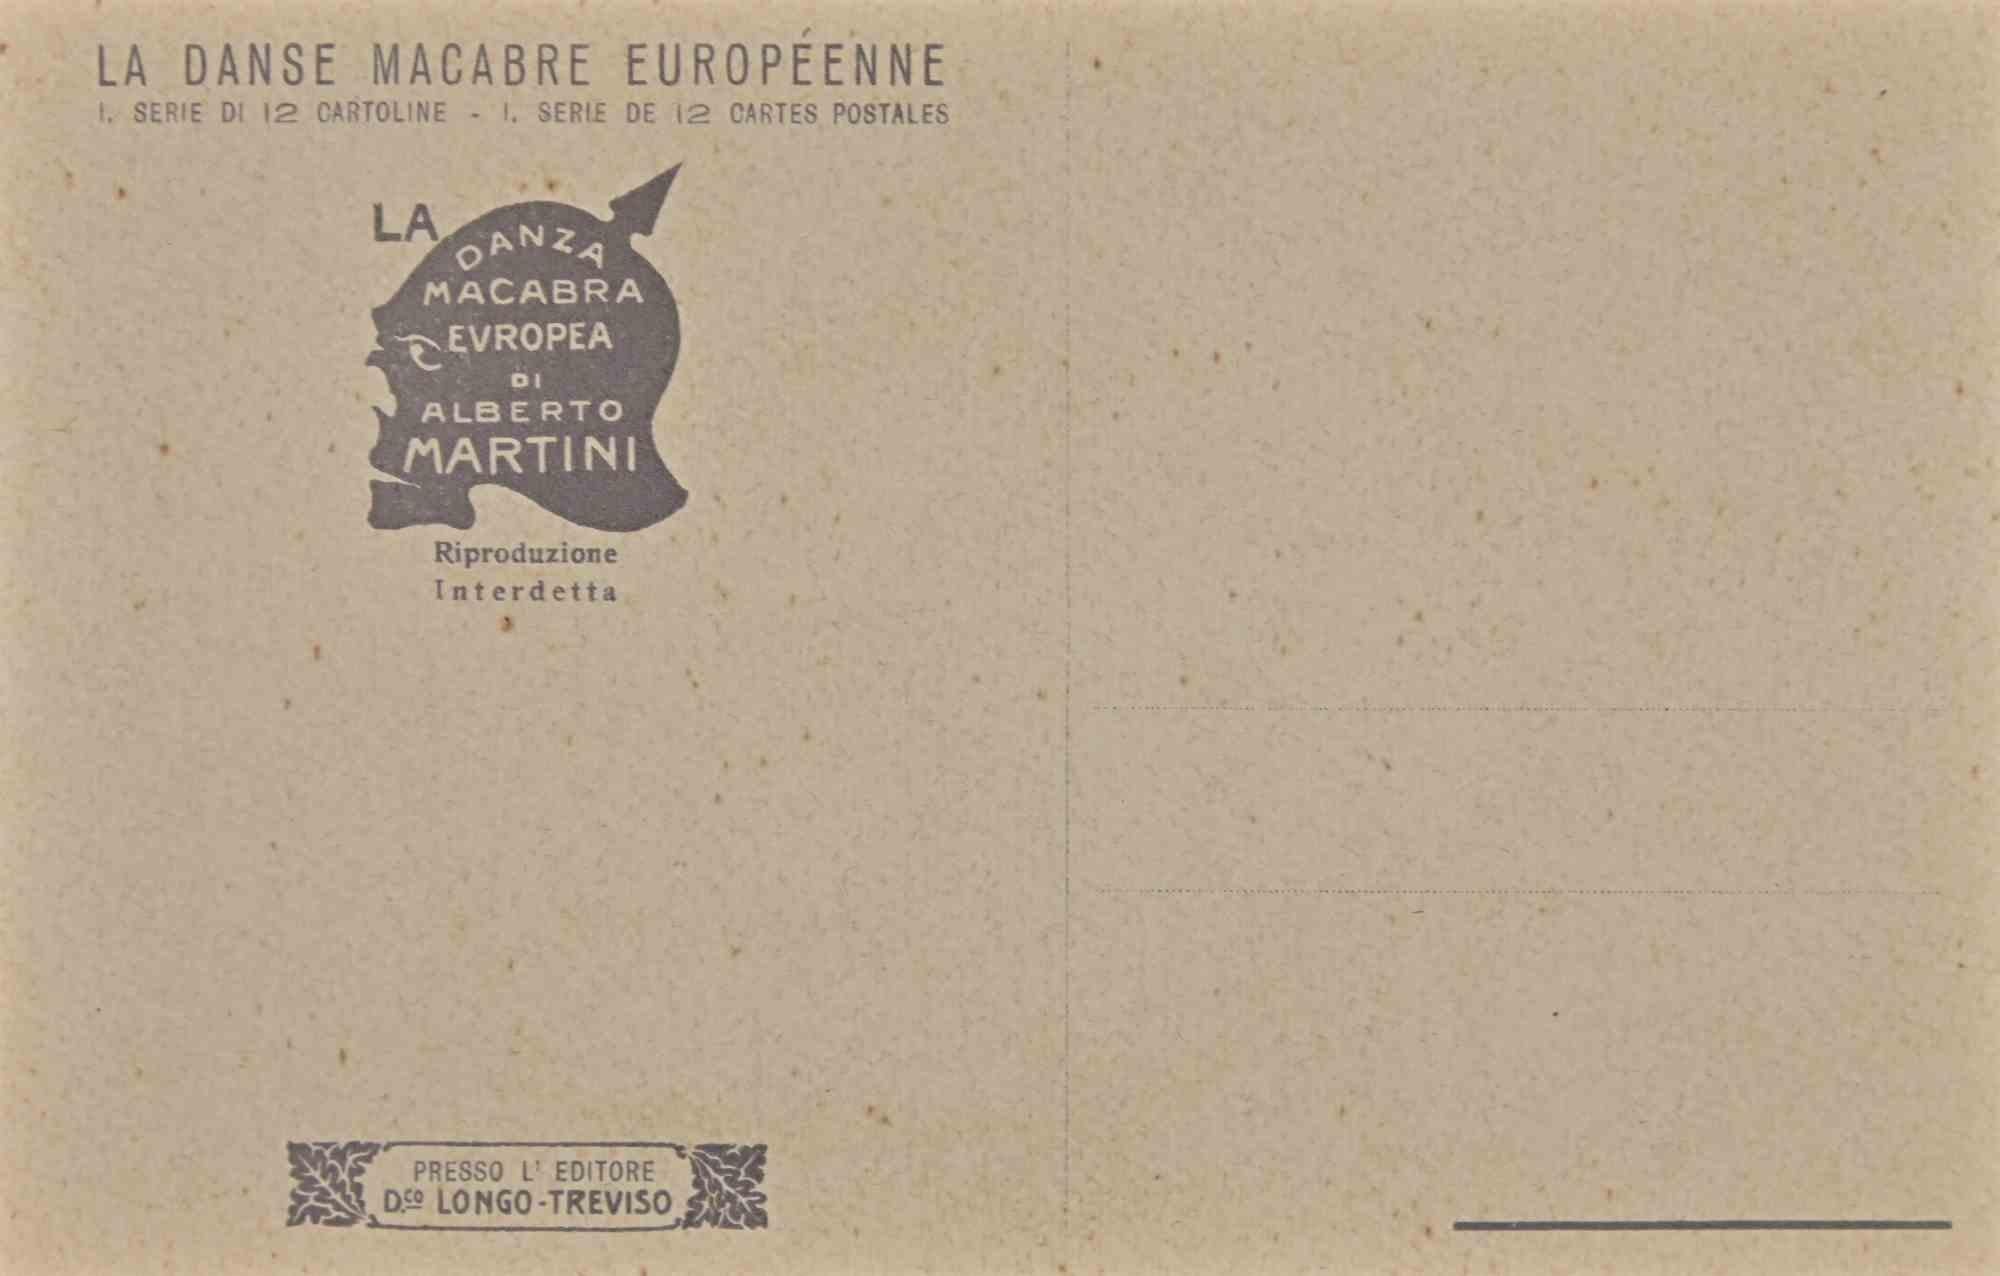 The European Macabre Dance N.8  - Lithograph by A. Martini - 1915 - Print by Alberto Martini